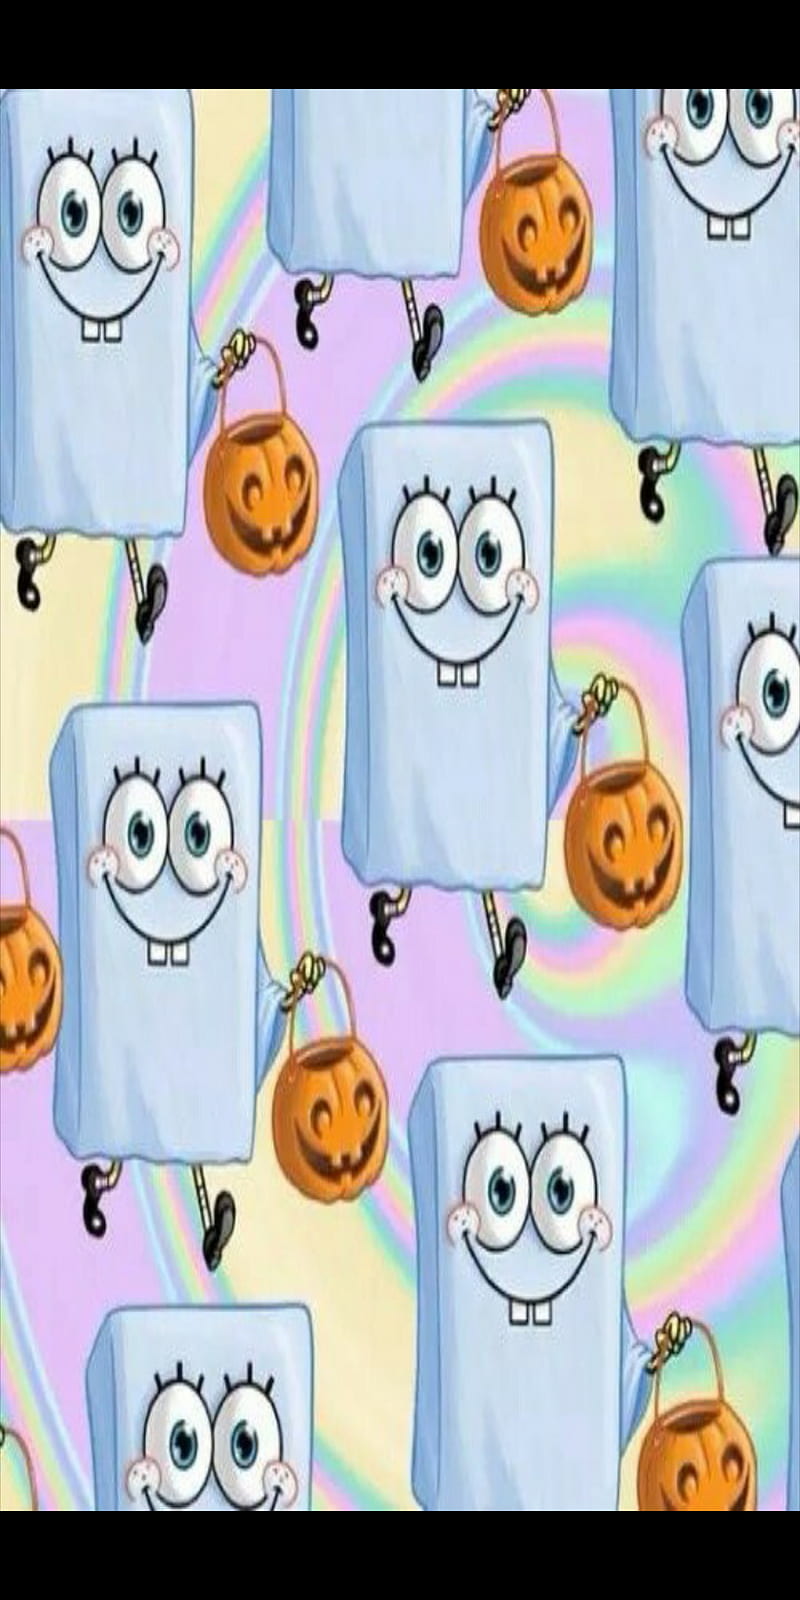 spongebob squarepants halloween wallpaper